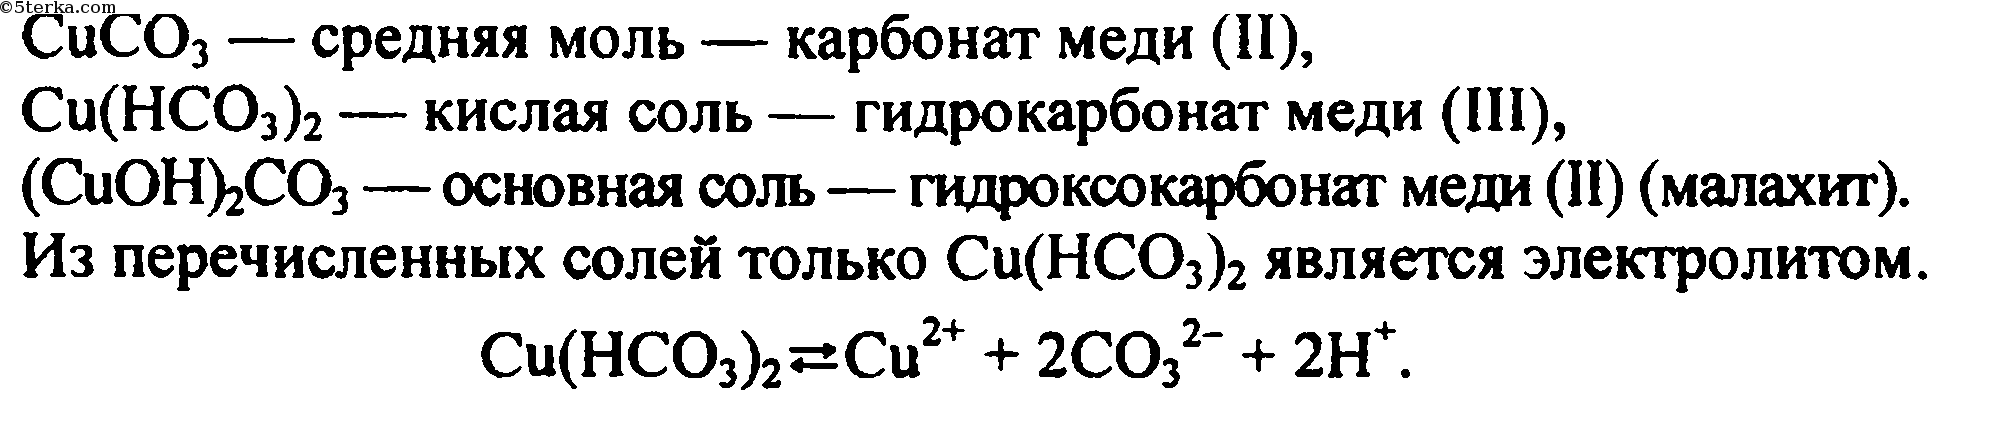 Гидрокарбонат свинца ii. Гидроксокарбонат меди формула. Карбонат меди формула. Гидроксокарбонат меди II формула. Гидрокарбонат меди 2.